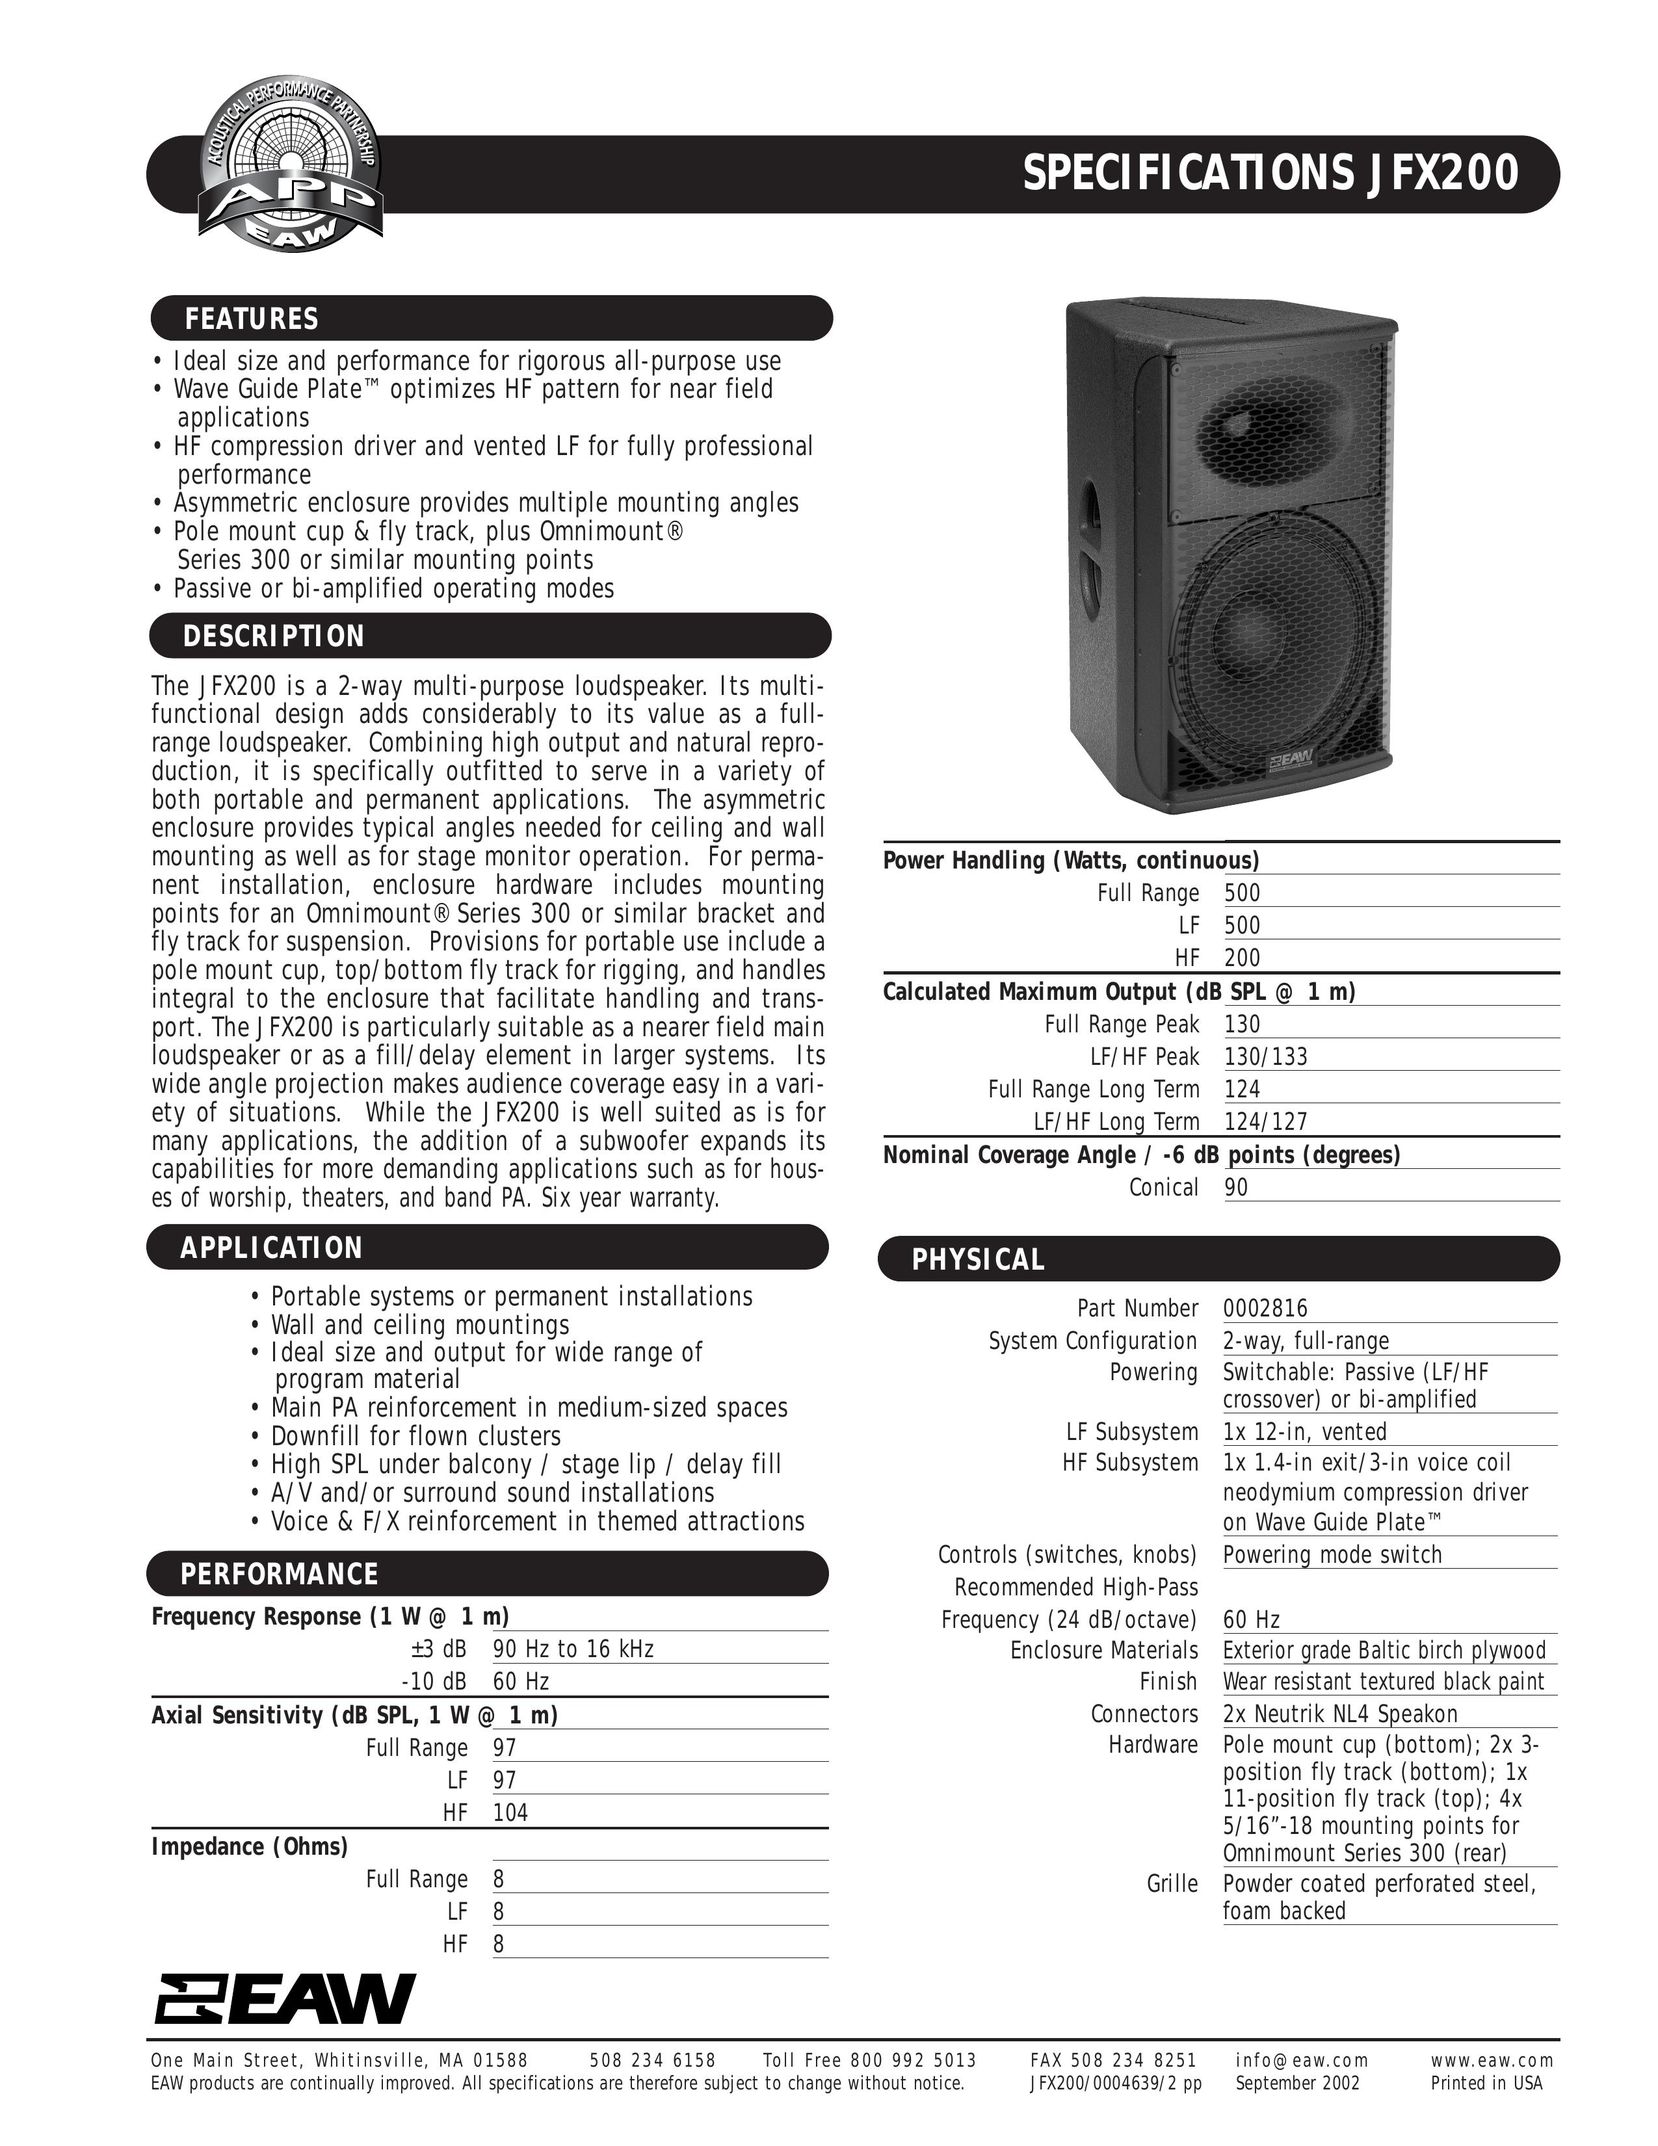 EAW JFX200 Portable Speaker User Manual